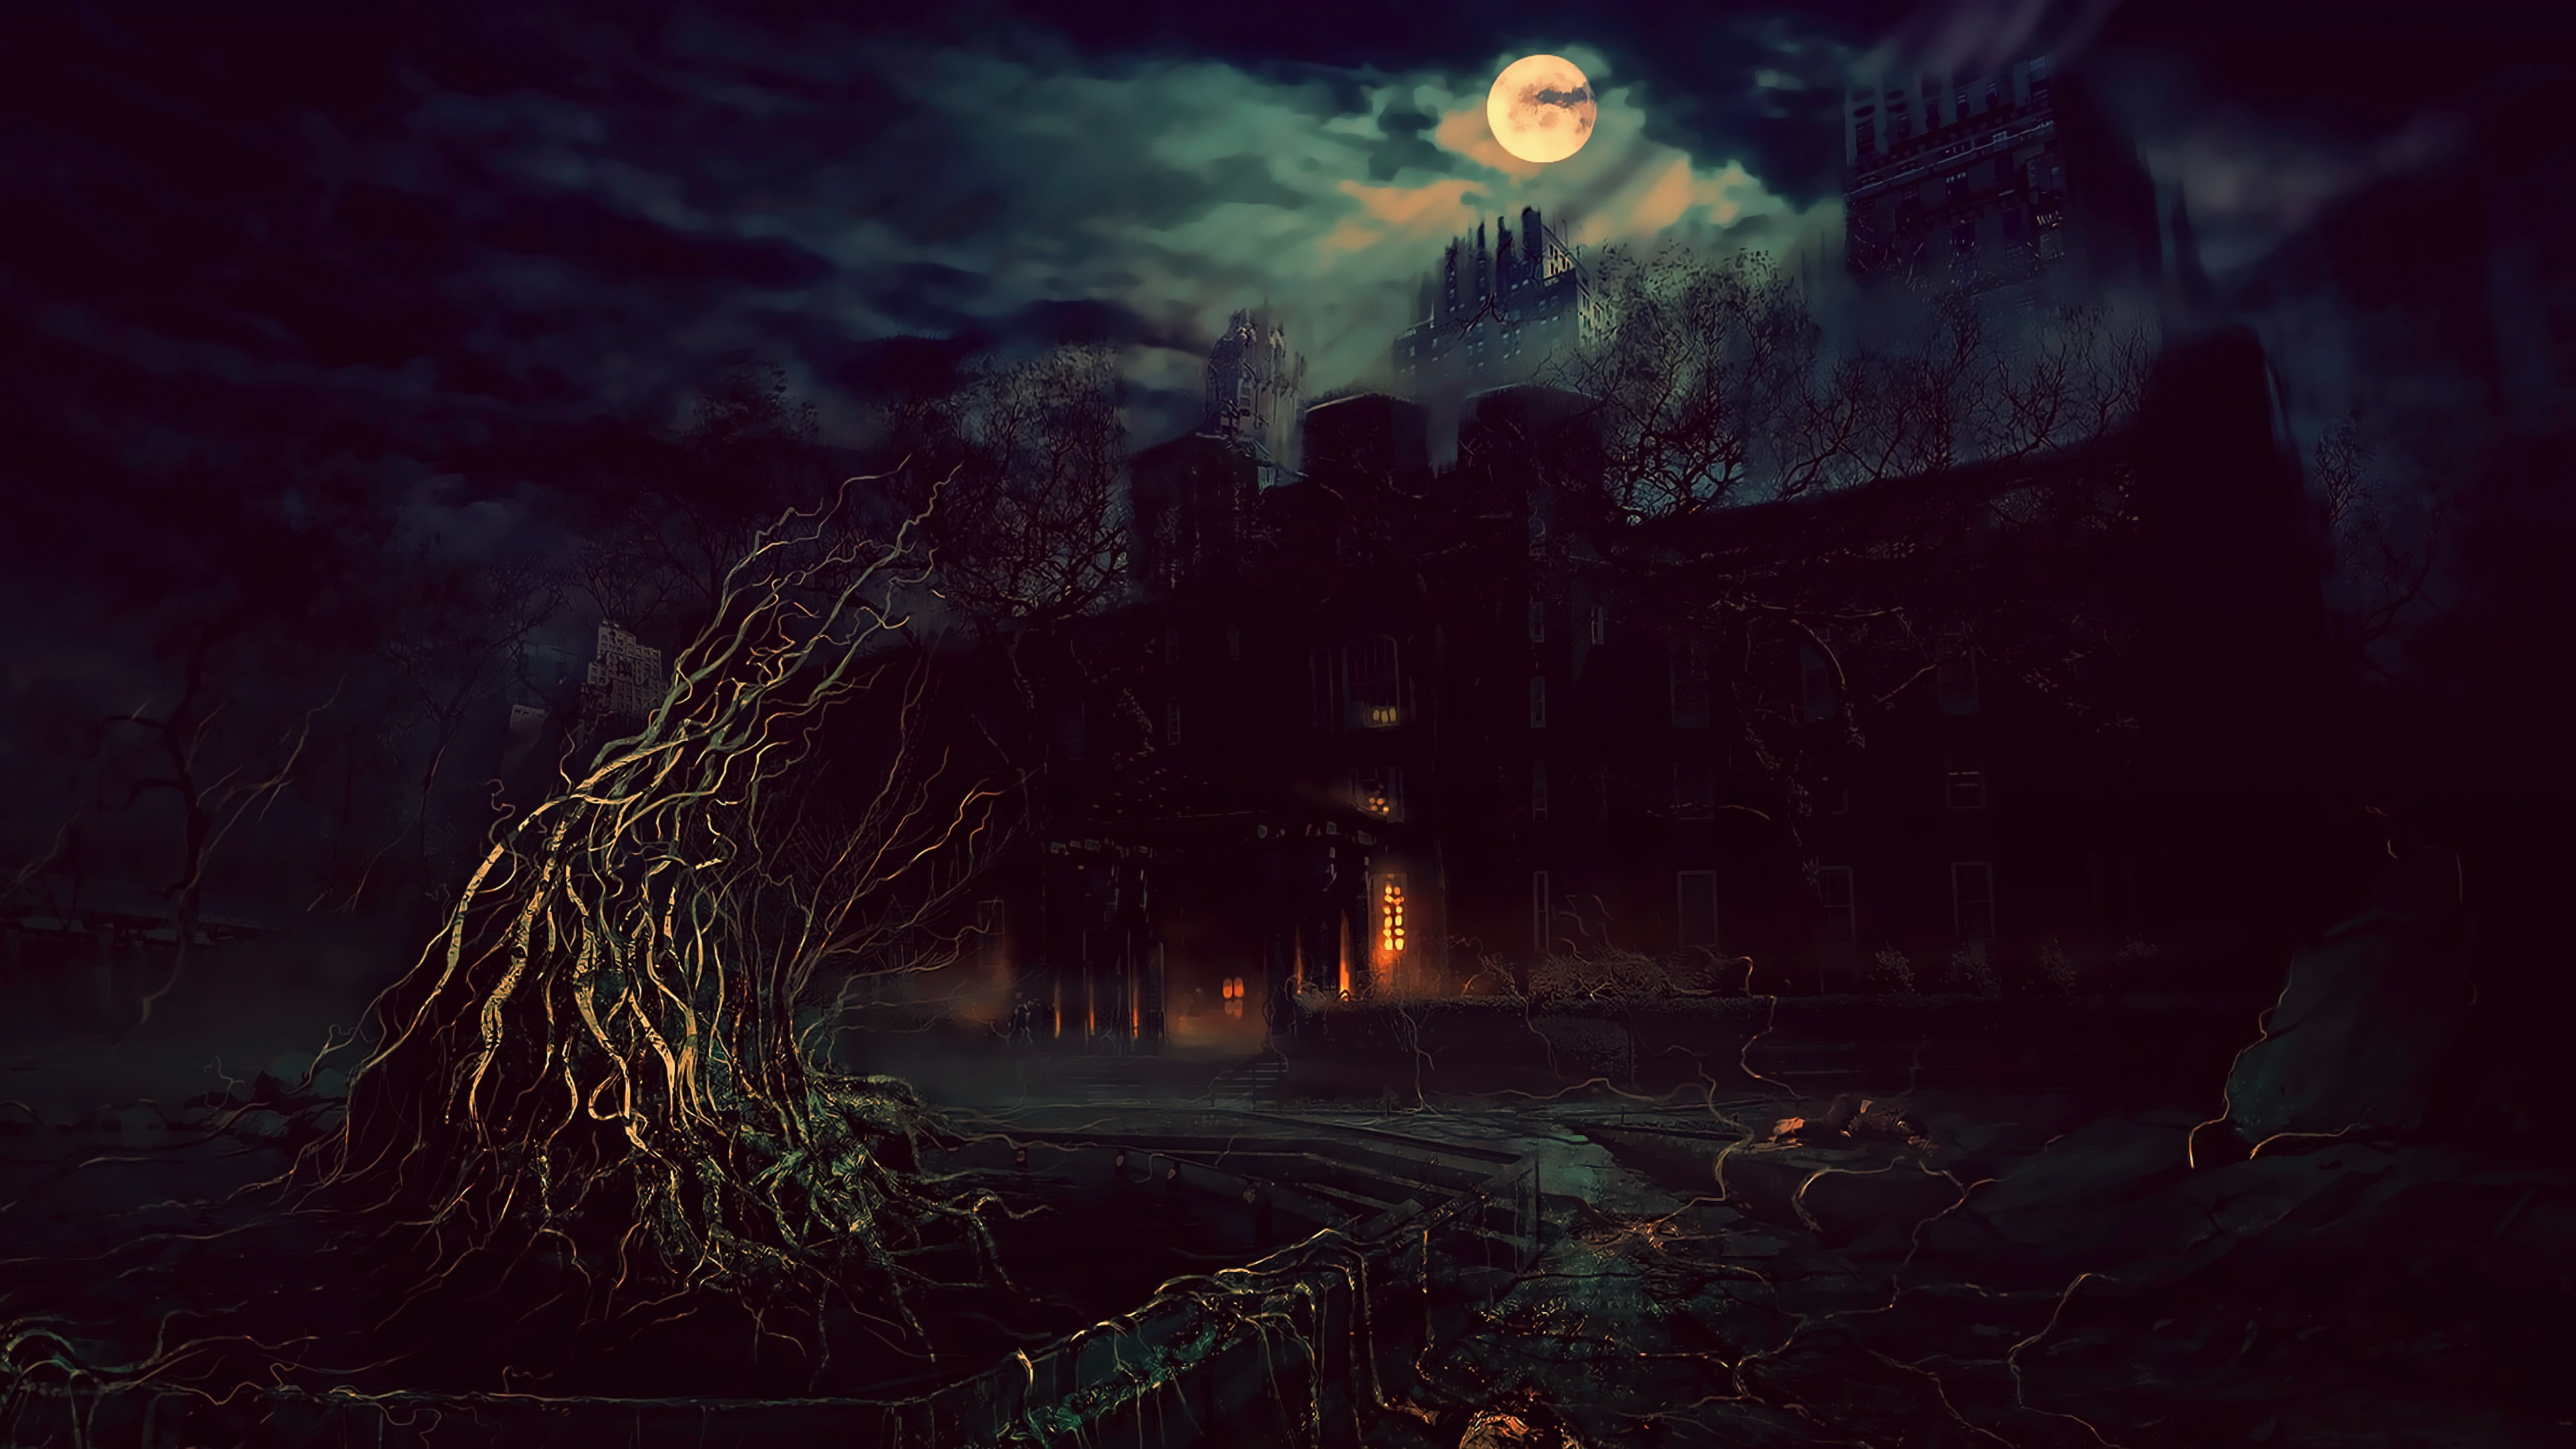 ghost castle wallpaper, Terror, night, fantasy art, Photoshop